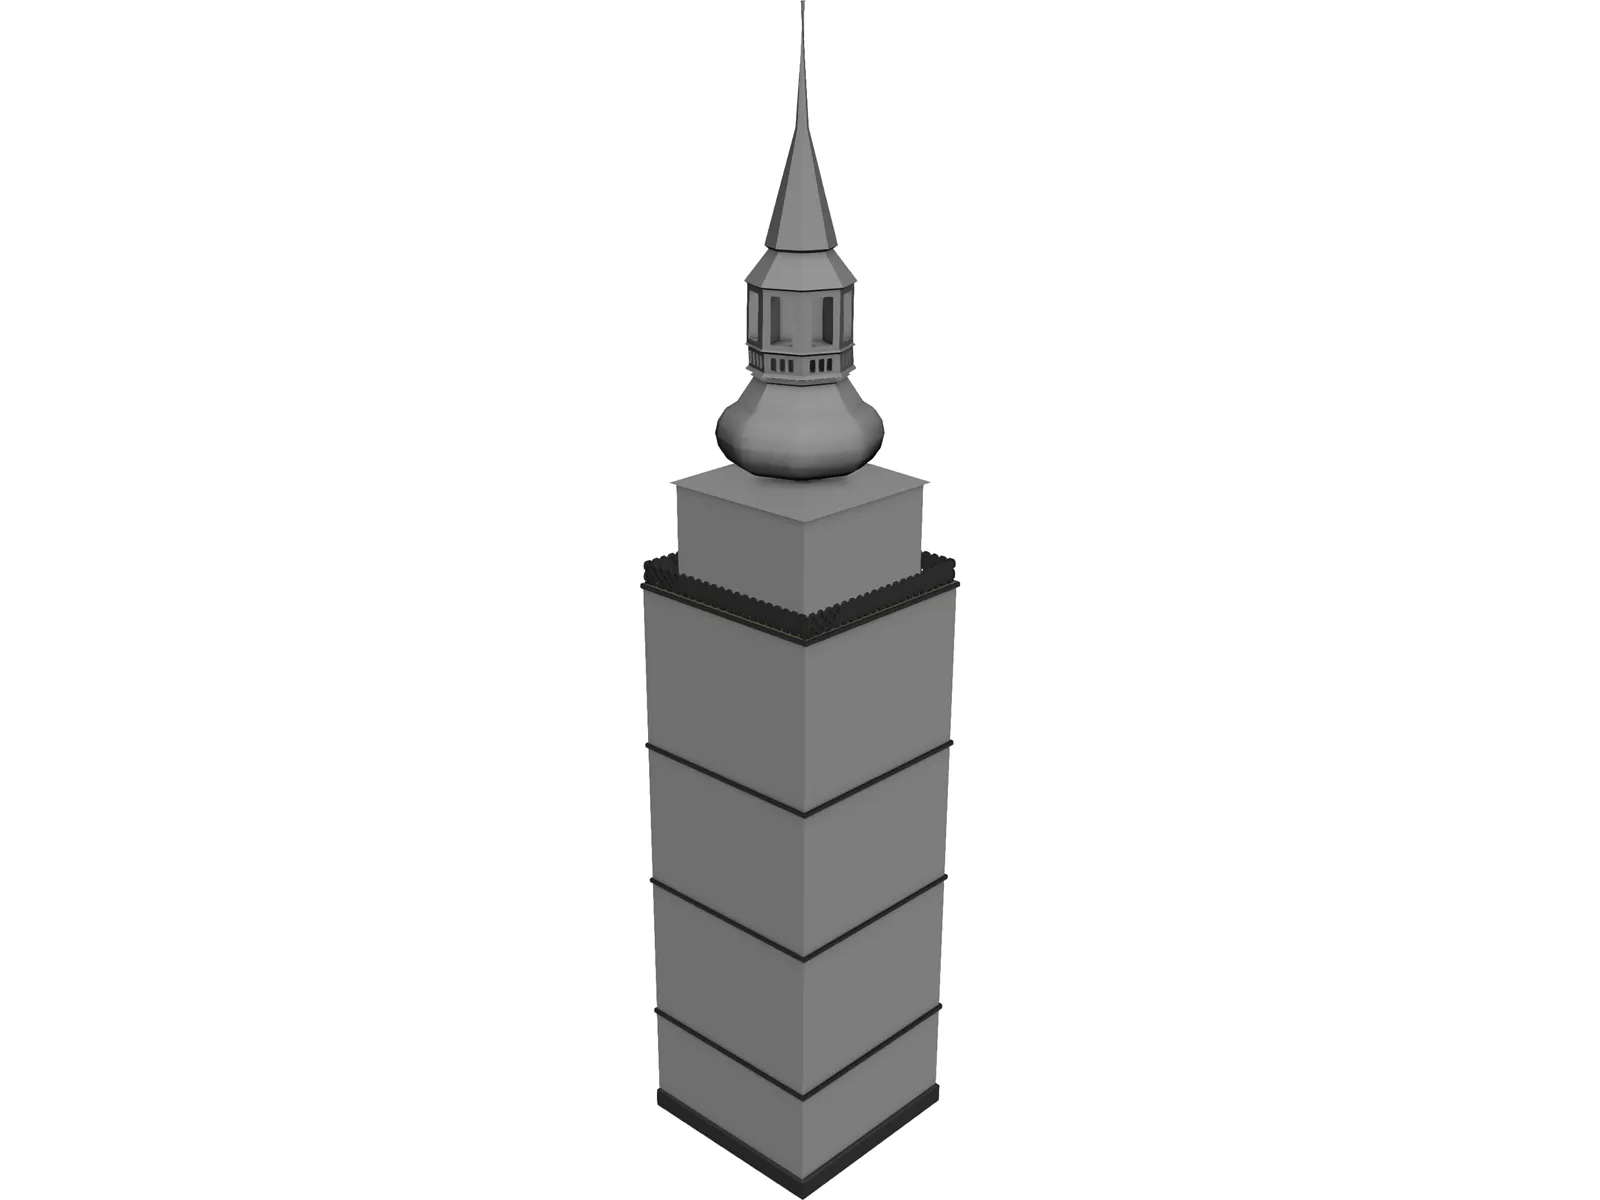 Nizna City Tower of Church  3D Model